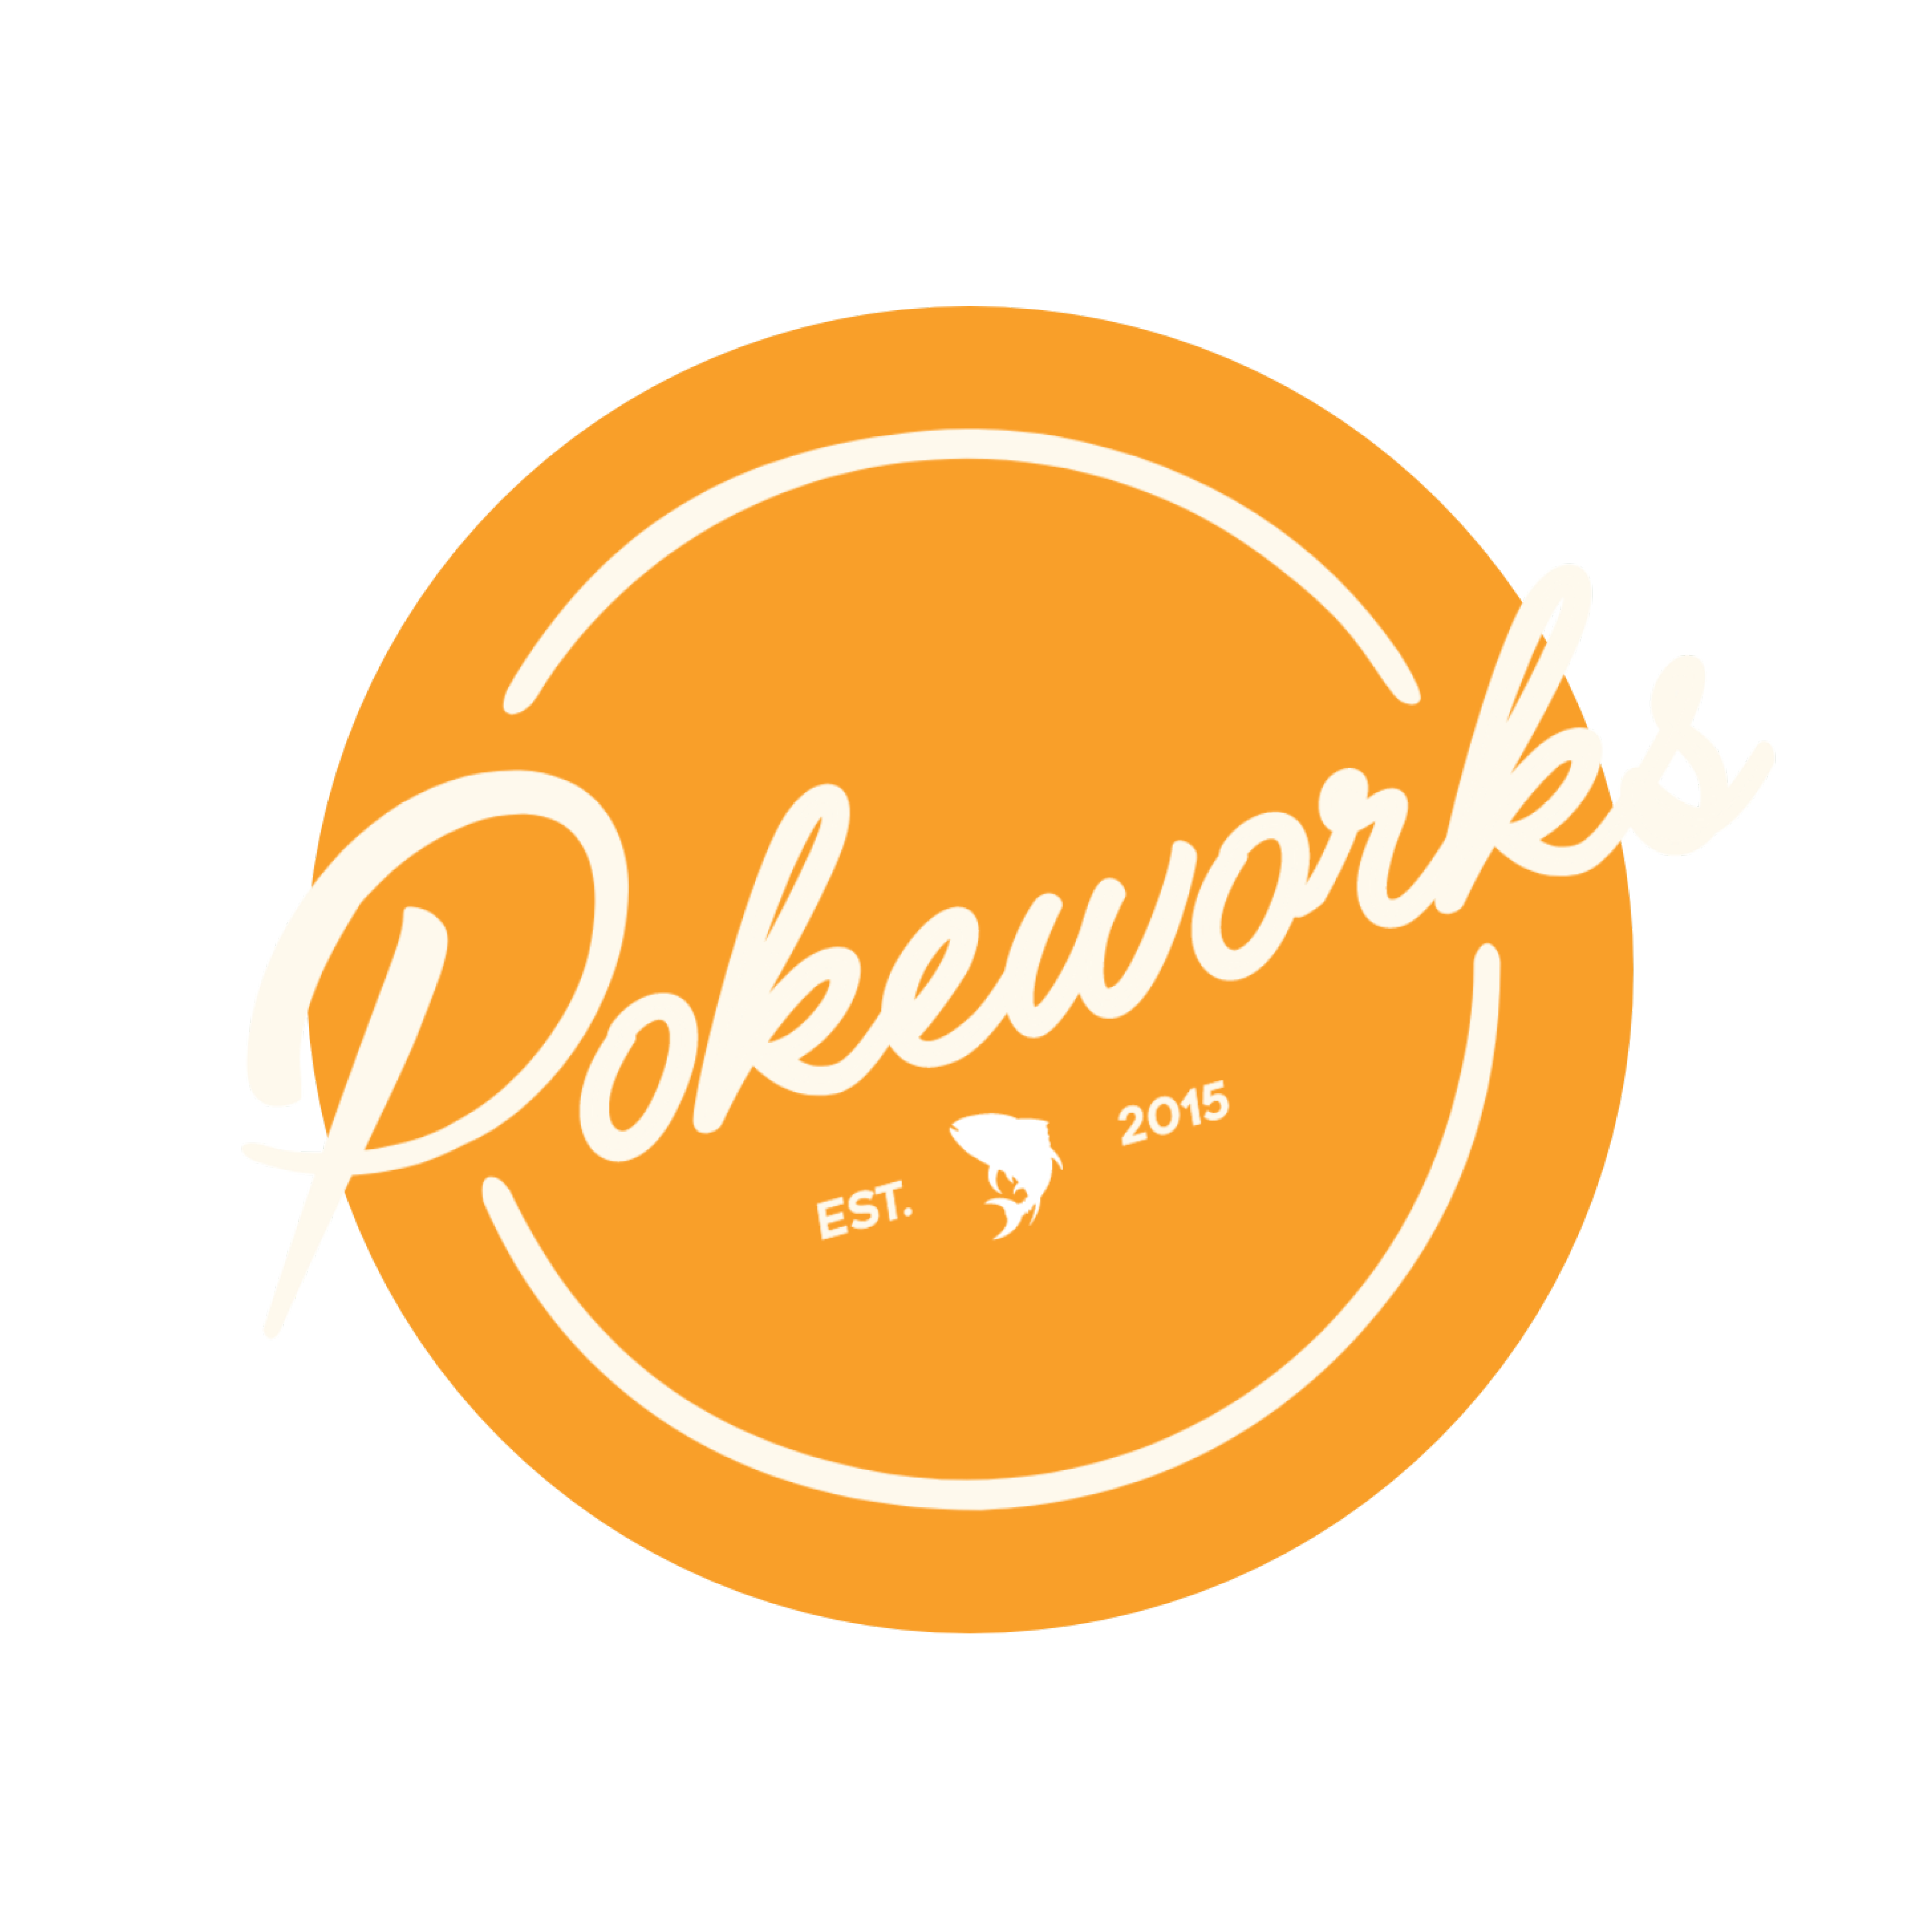 Poke works